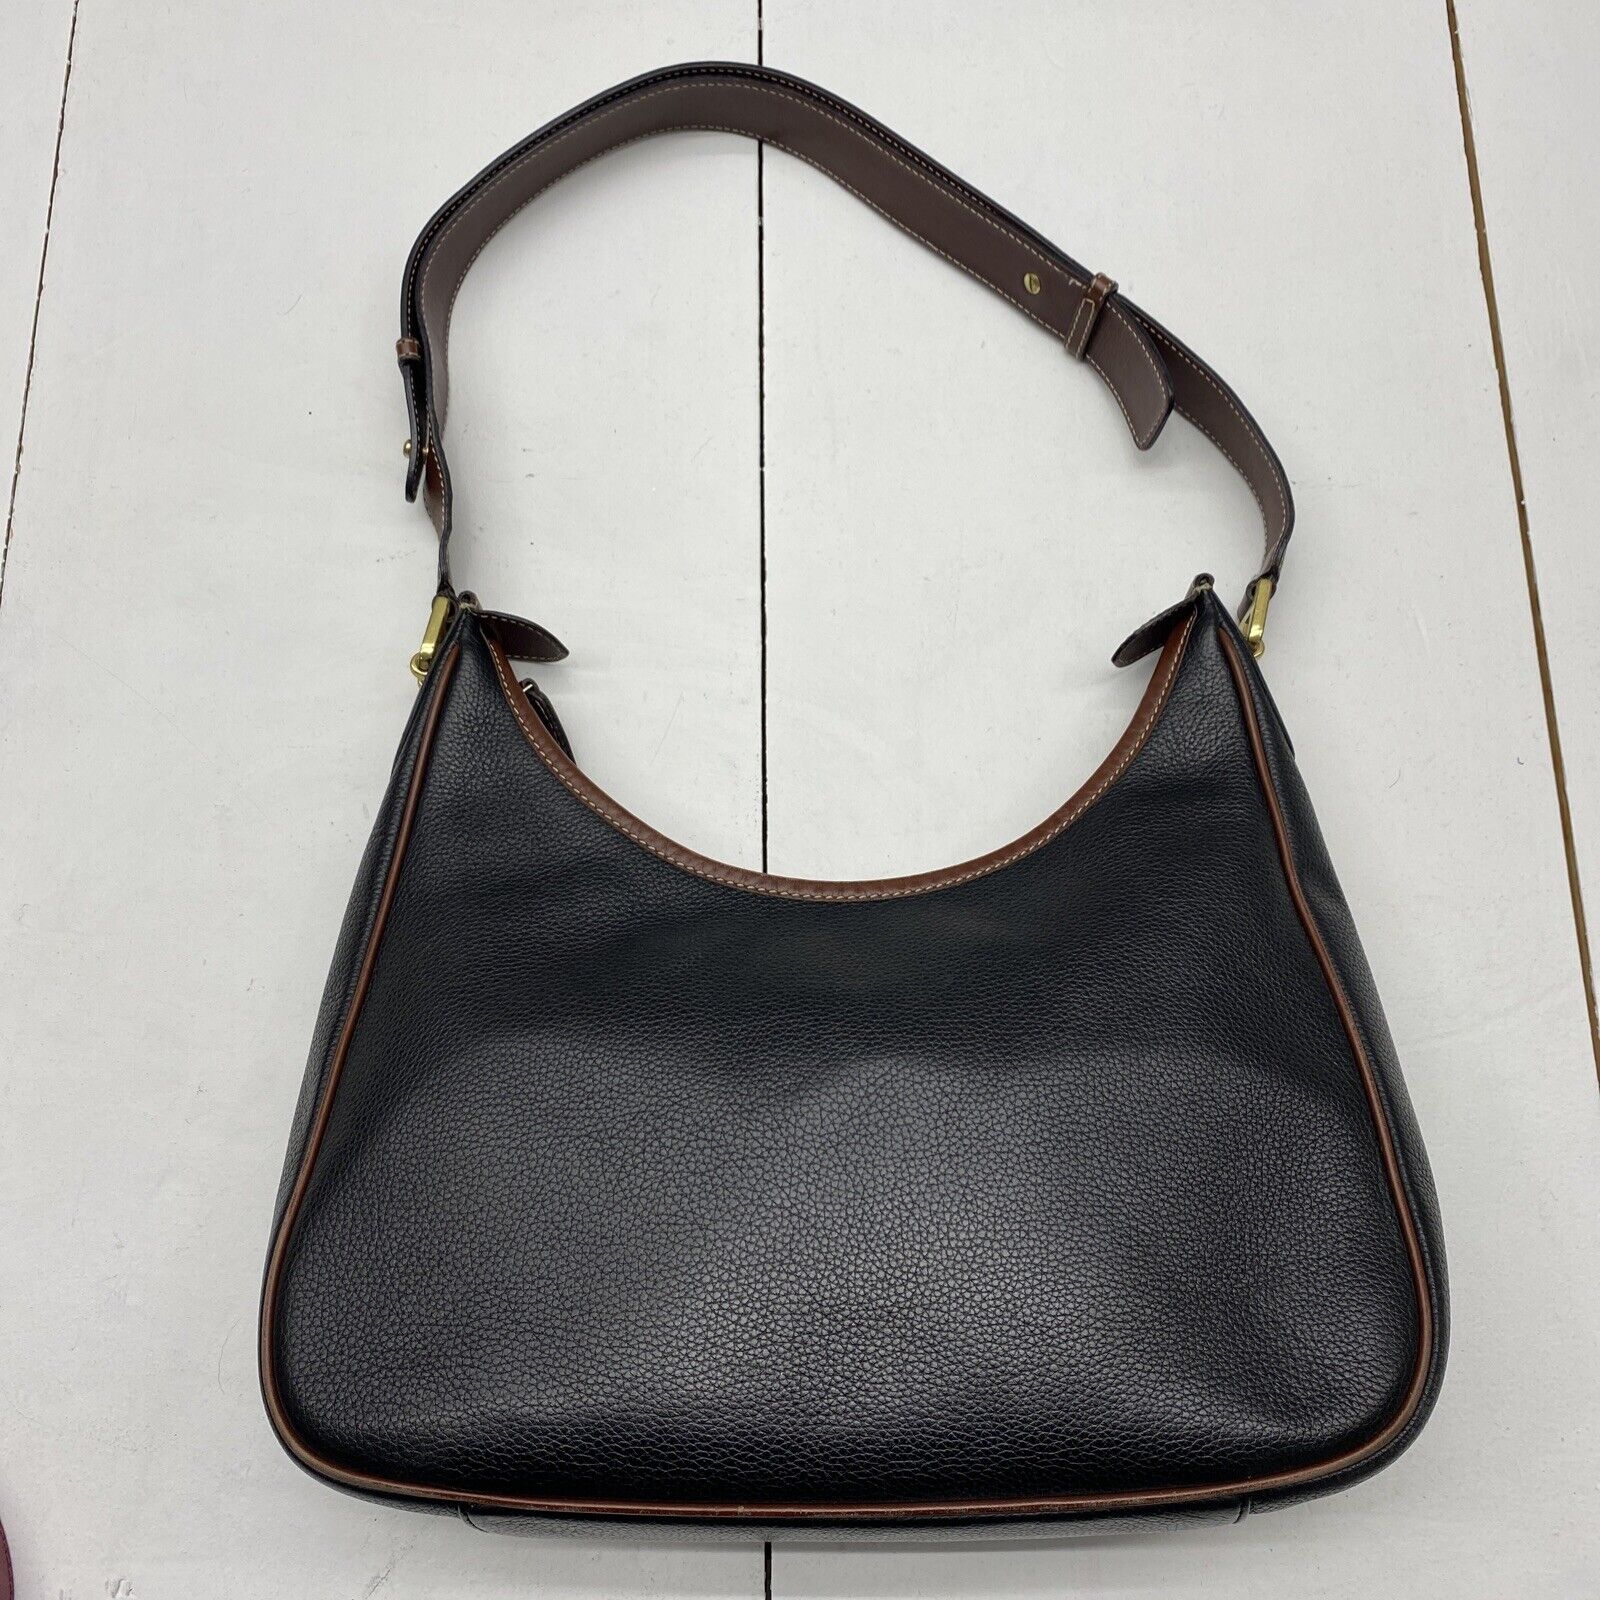 BALLY Black/Dark Brown Pebble Leather Shoulder Bag Purse*